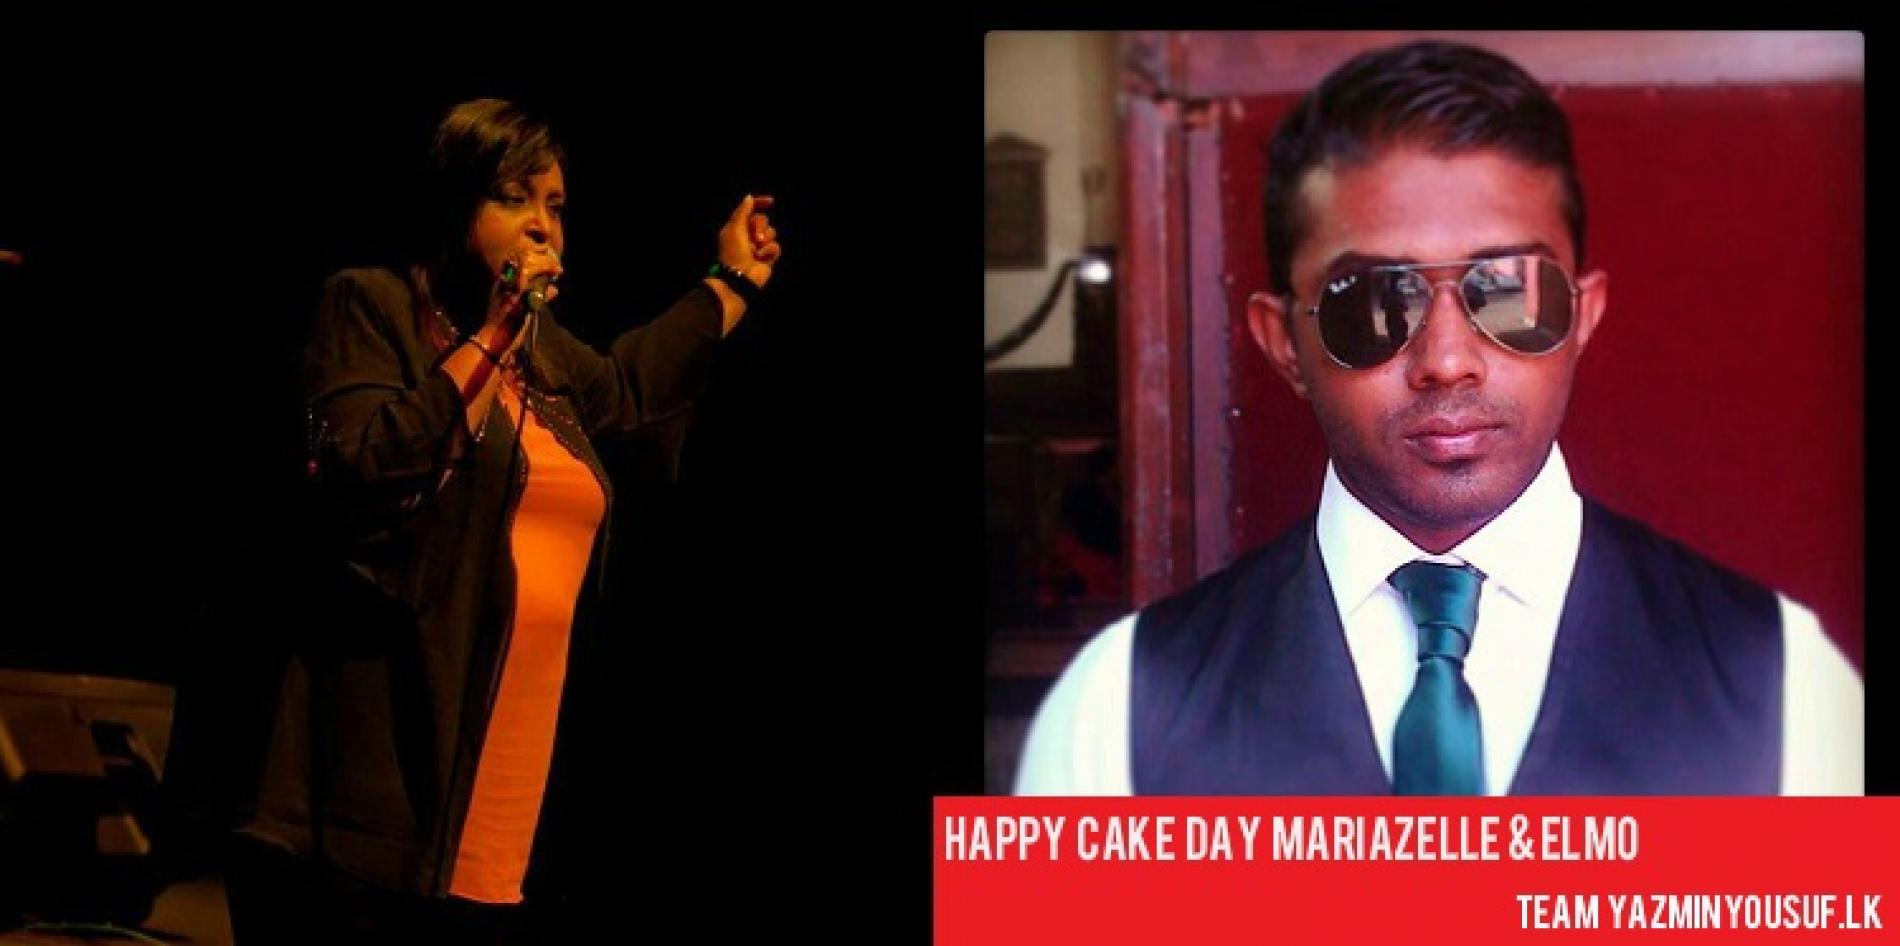 Happy Cake Day Mariazelle & Elmo